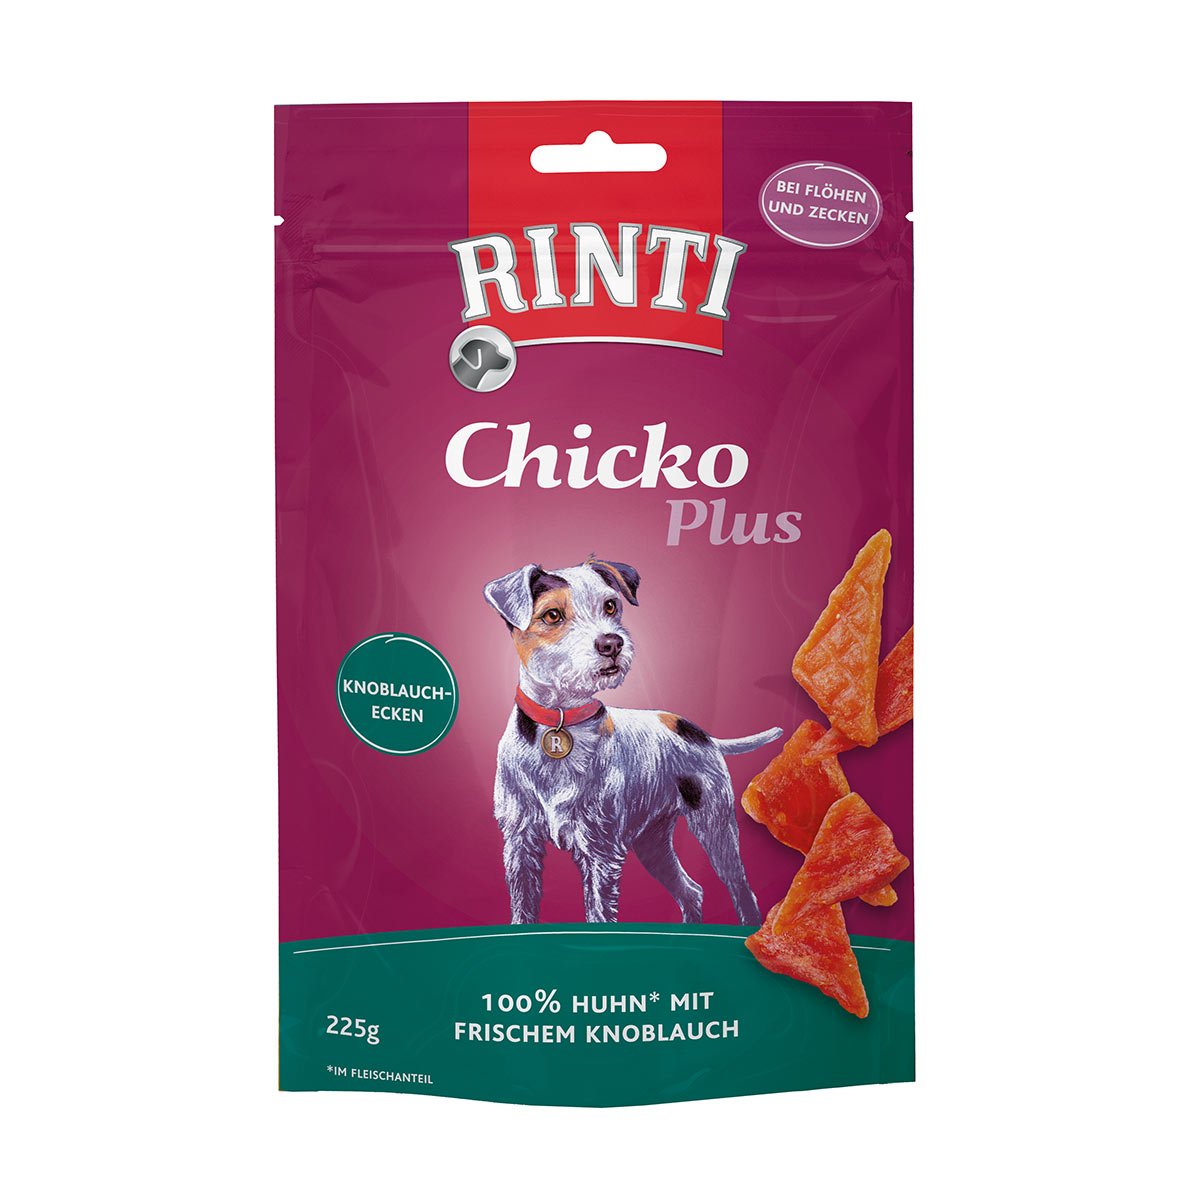 RINTI Chicko Plus Knoblauchecken 3x225g